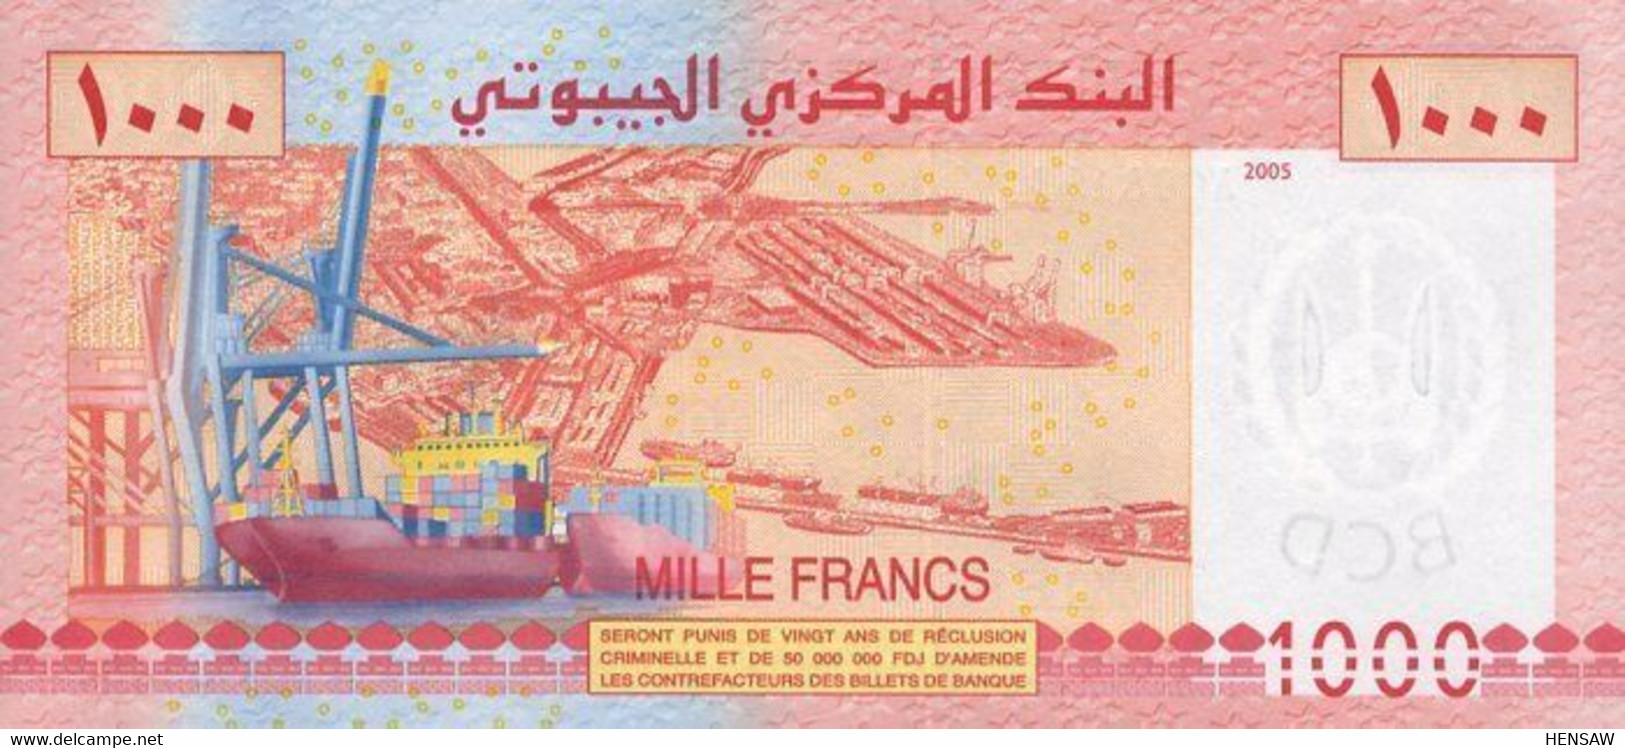 DJIBOUTI 1000 FRANCS P 42 2005 UNC SC NUEVO - Djibouti